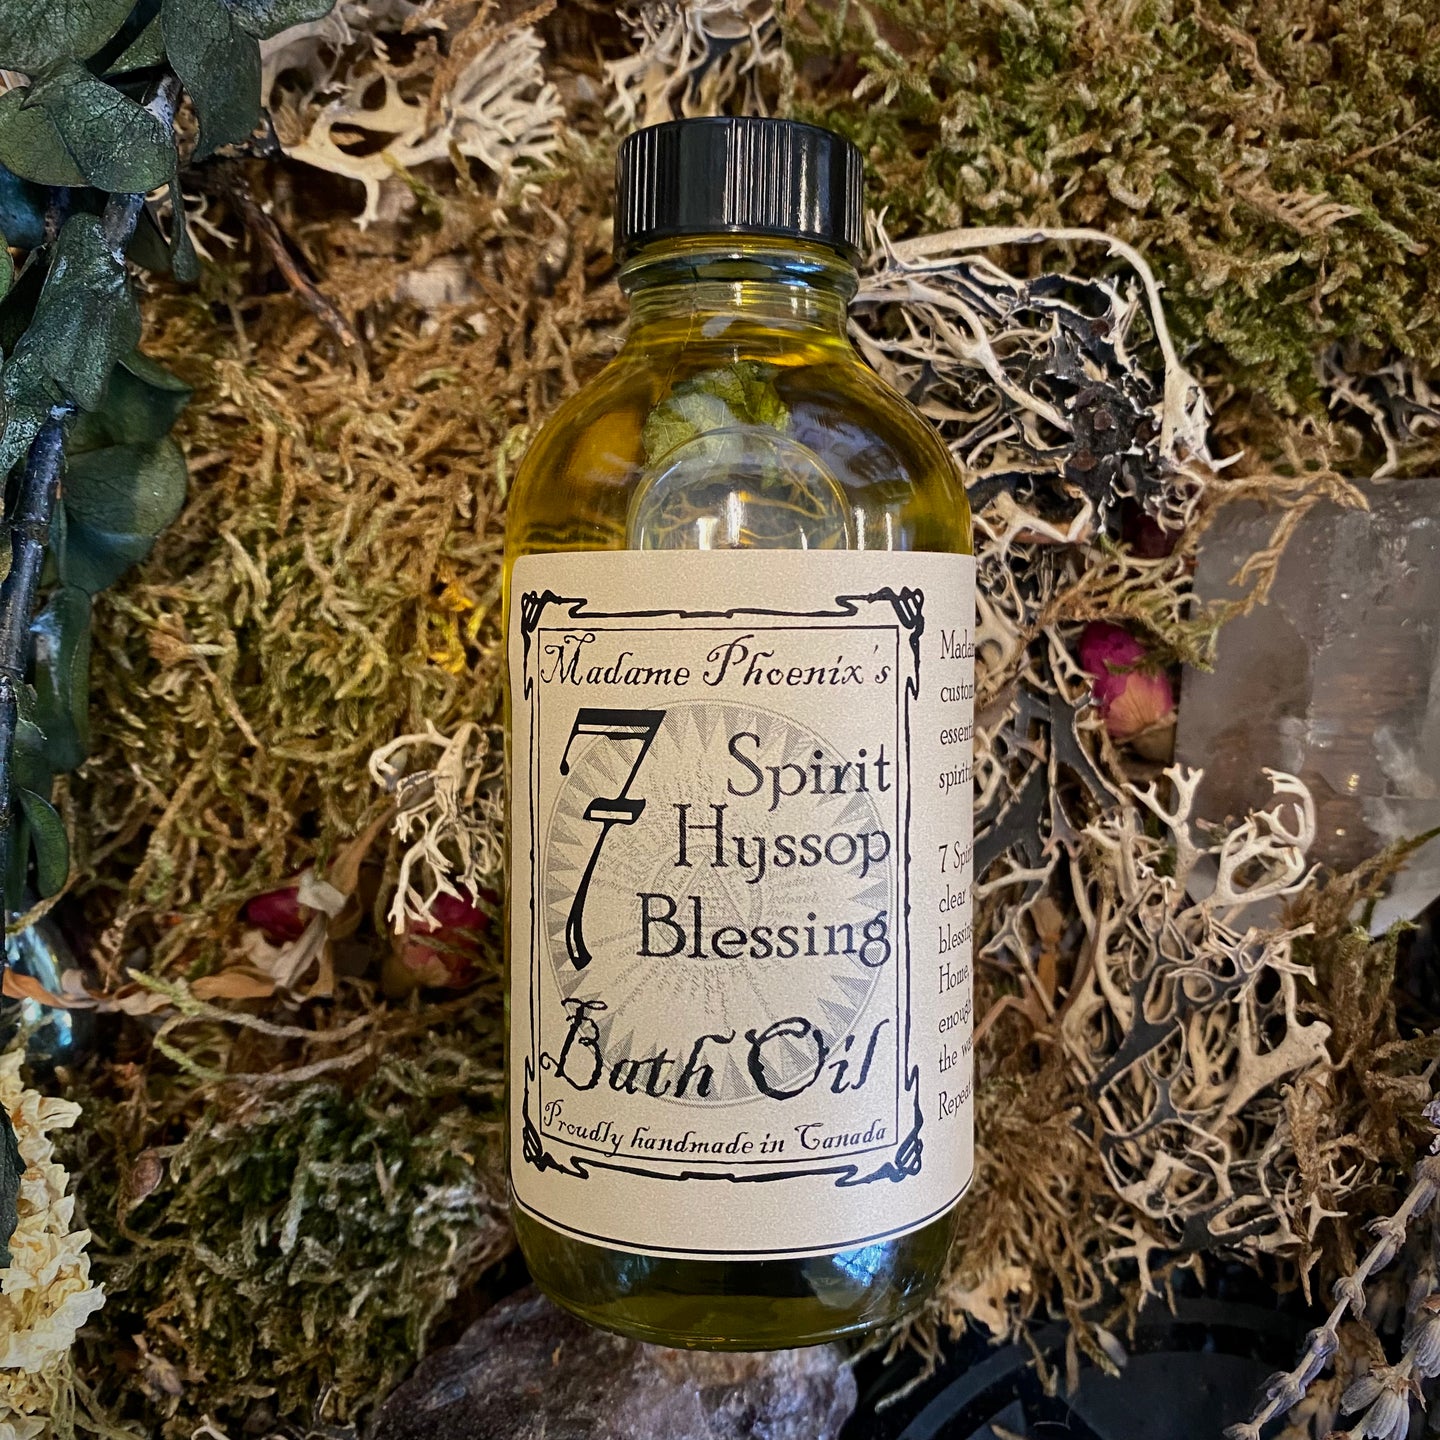 7 Spirit Hyssop Blessing Bath Oil